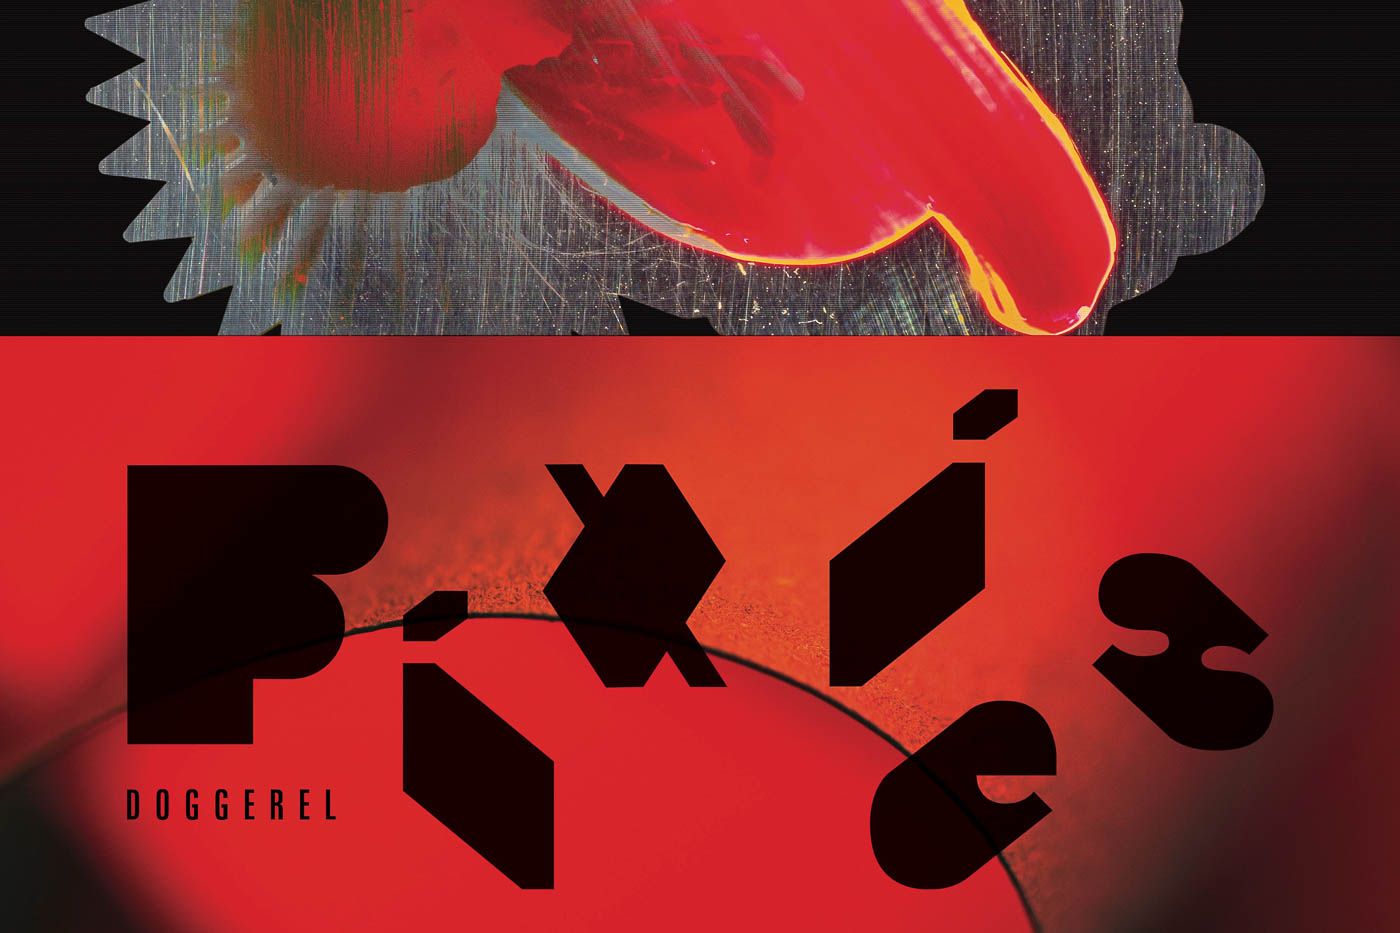 Pixies “Doggerel” (BMG, 2022)